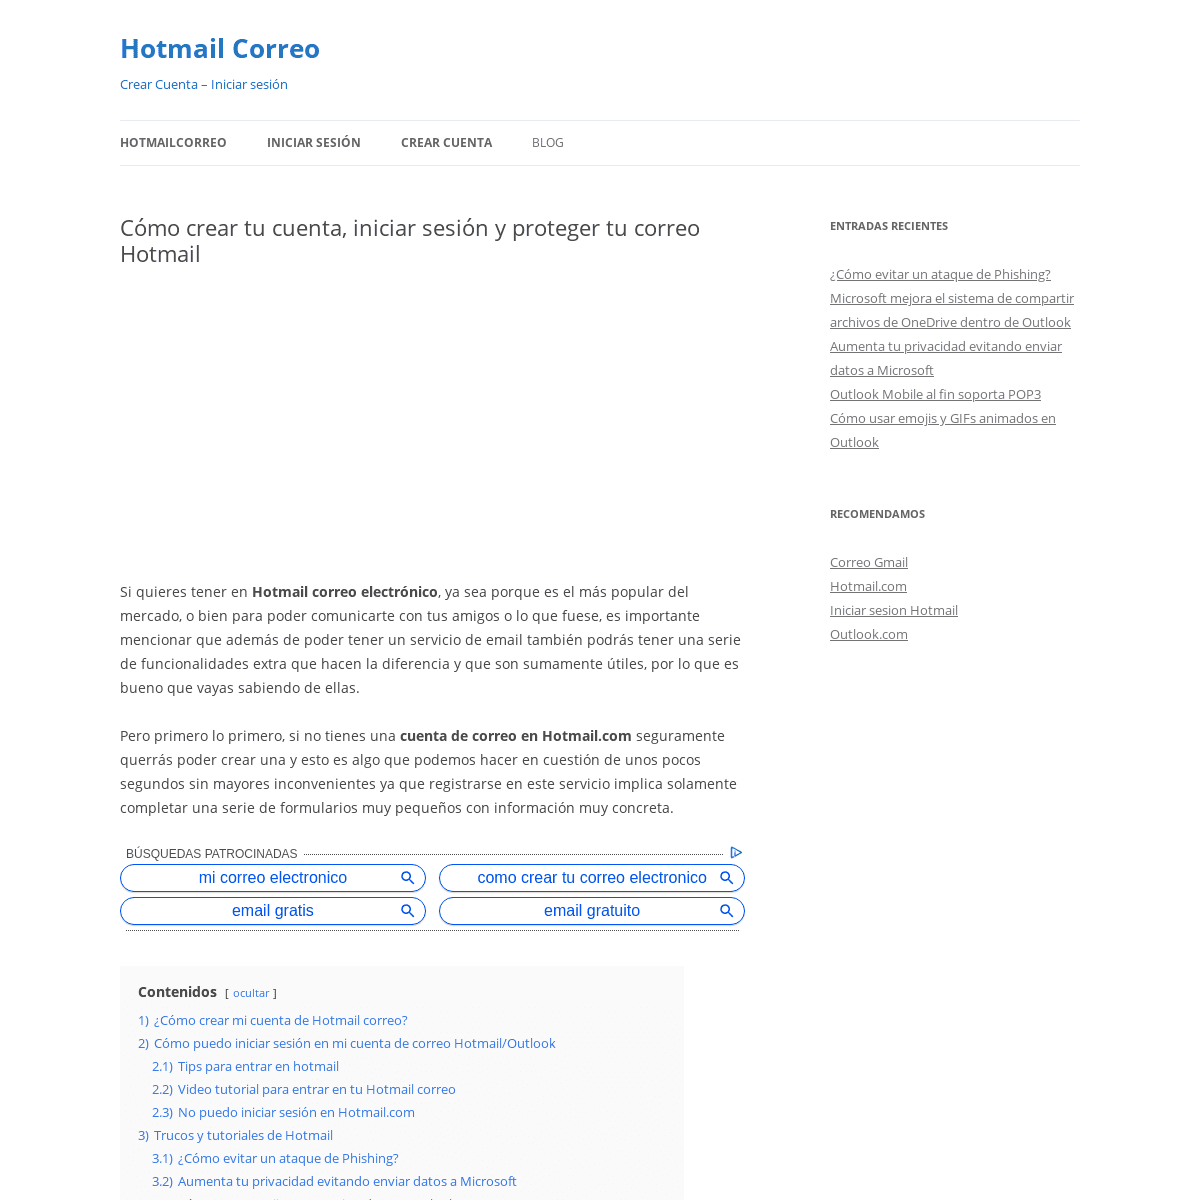 A complete backup of hotmailcorreo.com.mx